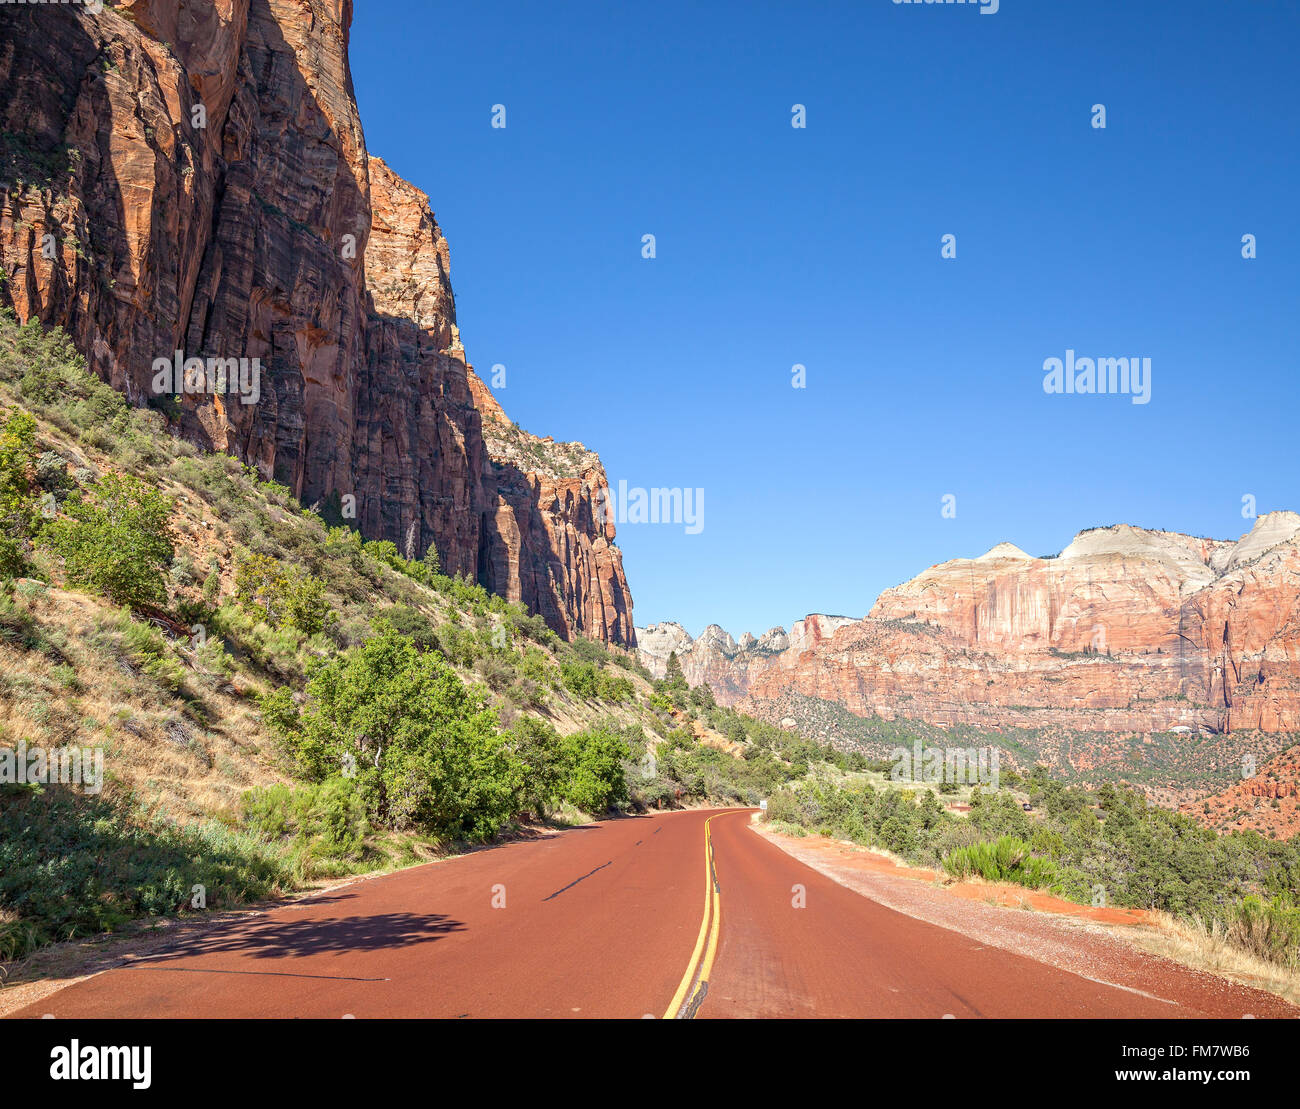 Rote Straße mit Ausblick im Zion Nationalpark, Utah, USA. Stockfoto